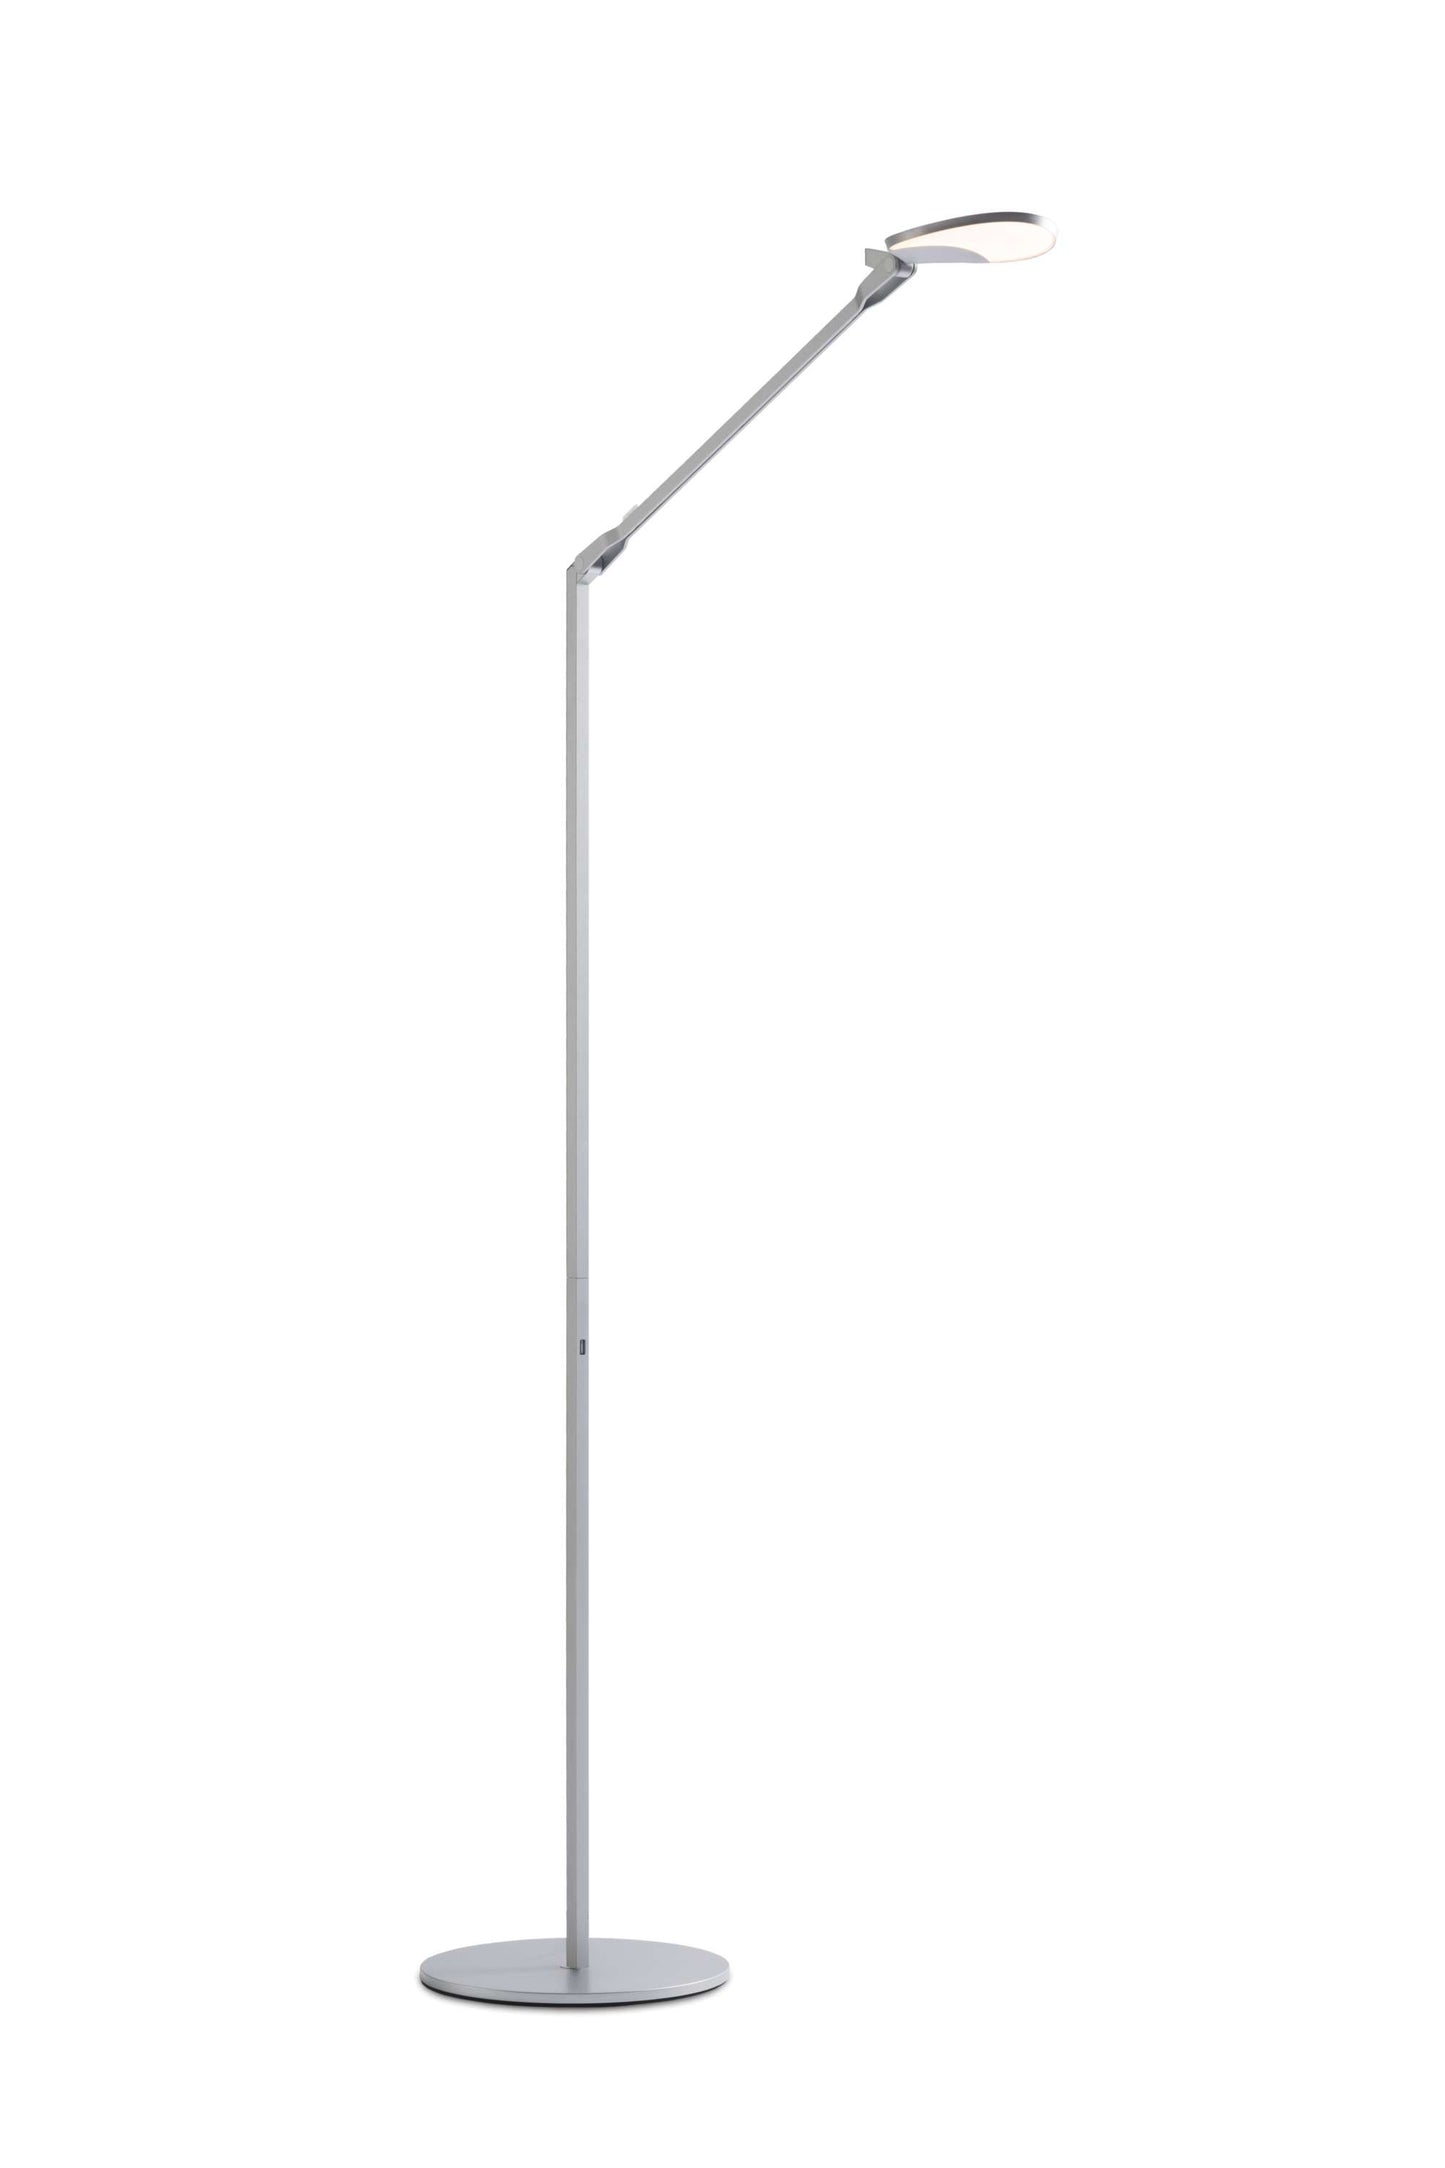 Koncept Splitty Floor Lamp with USB Port in Warm Light